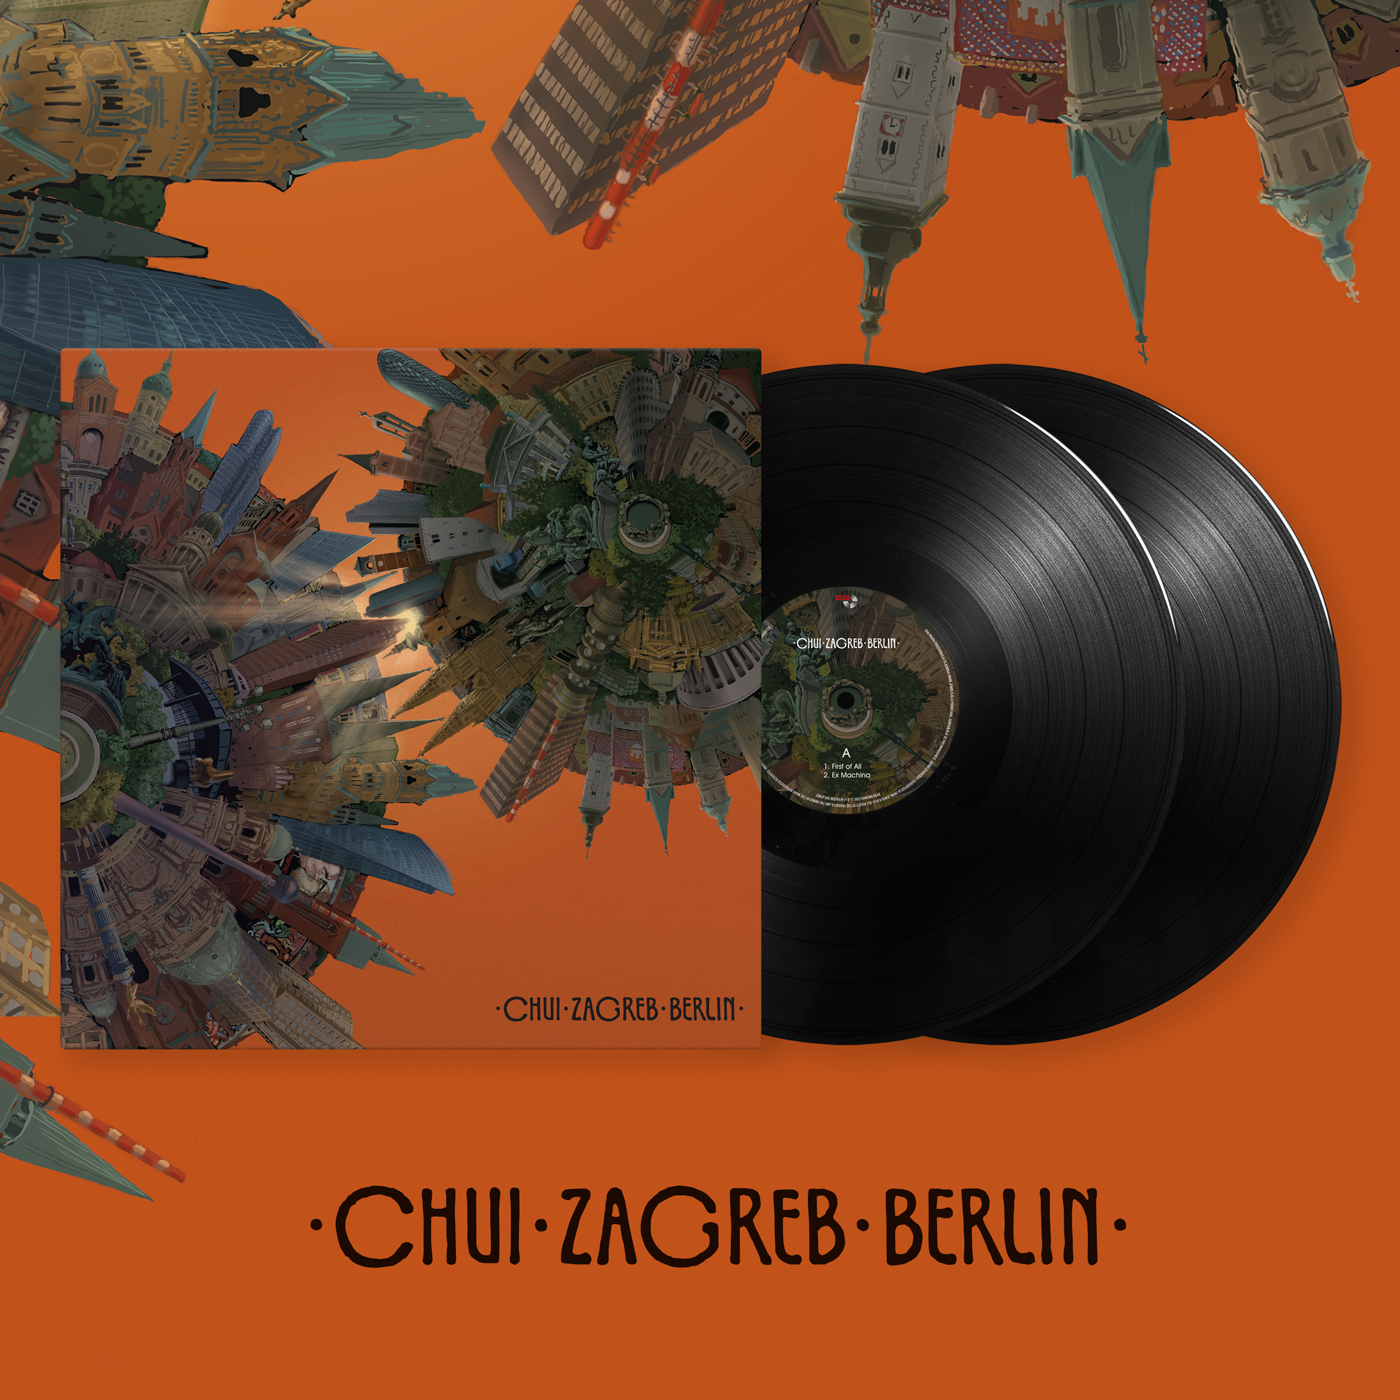 You are currently viewing Chui objavljuju vinilno izdanje “Zagreb-Berlin” na kojem je zablistala veličanstvena naslovnica albuma